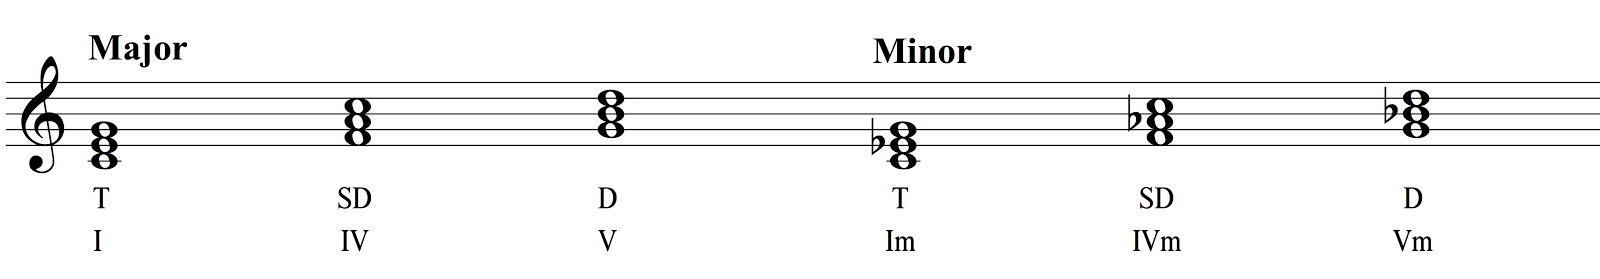 Major Chords vs. Minor Chords